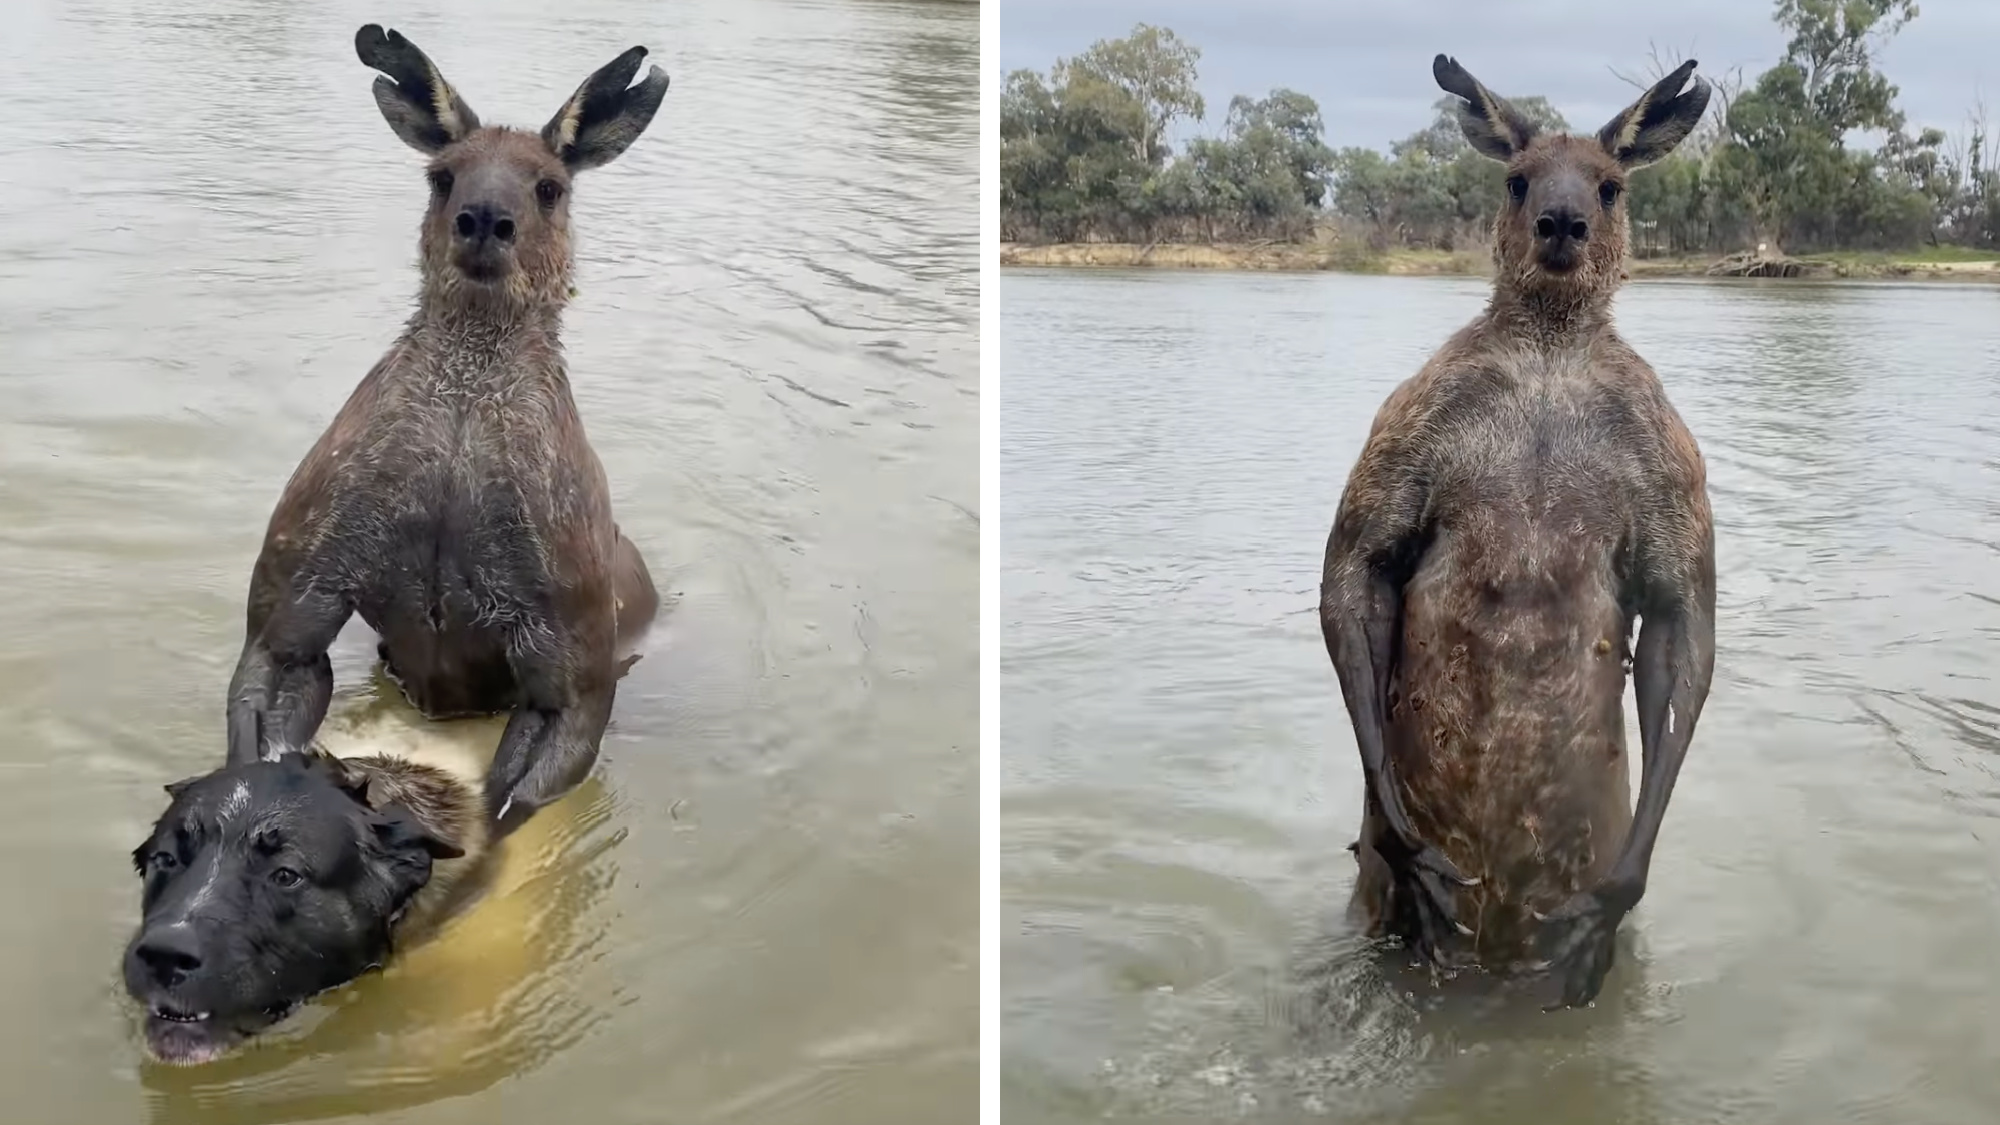 man punches kangaroo to rescue dog